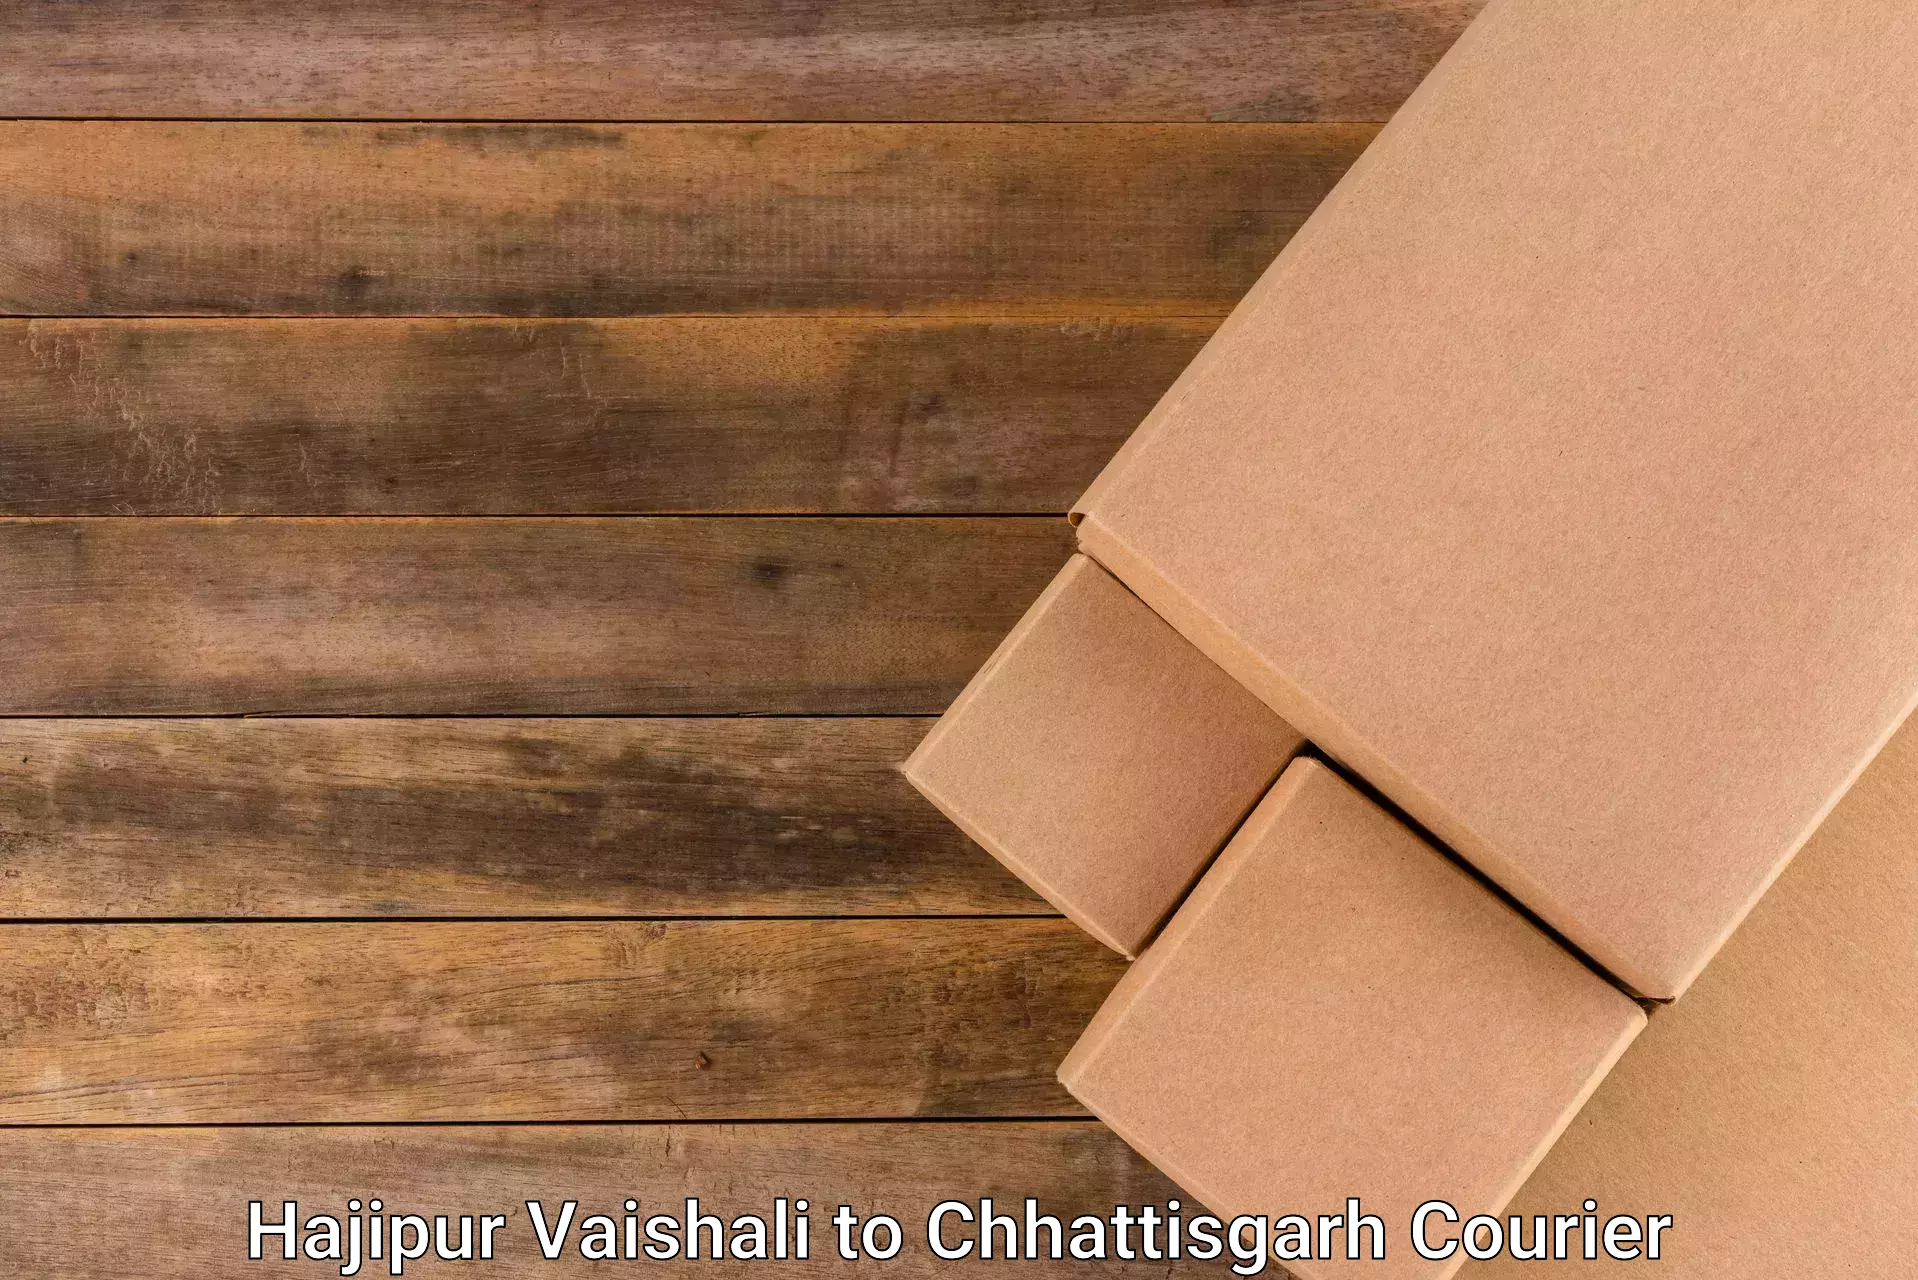 Express delivery network Hajipur Vaishali to Raigarh Chhattisgarh